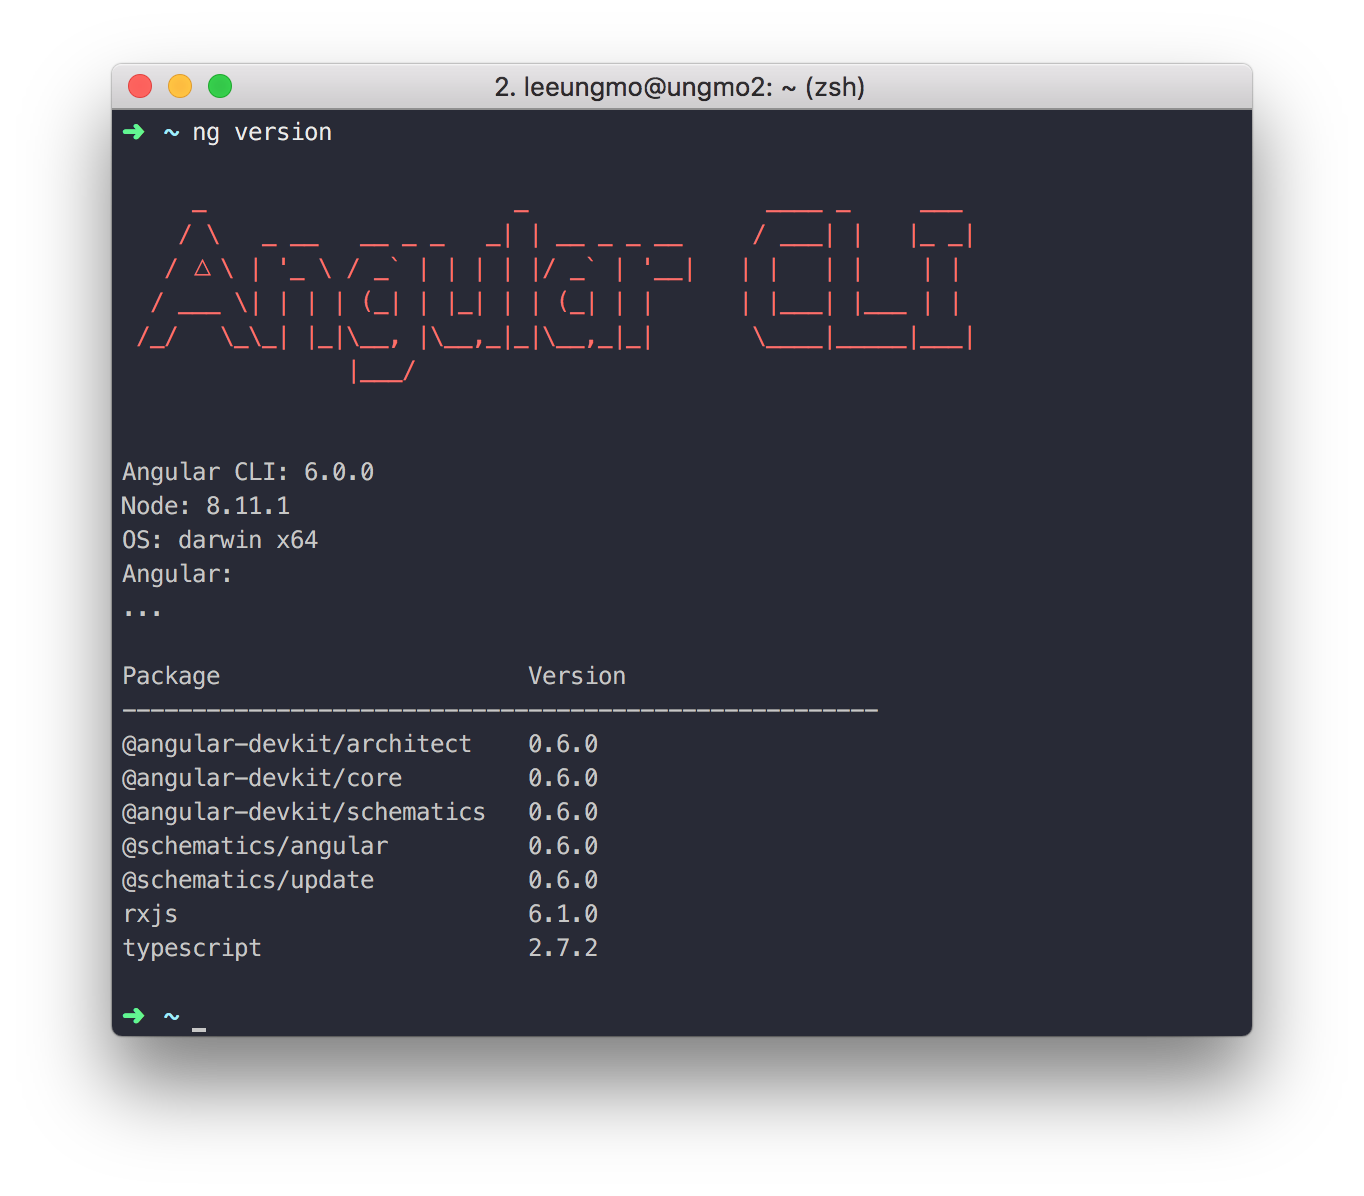 angular-cli-website